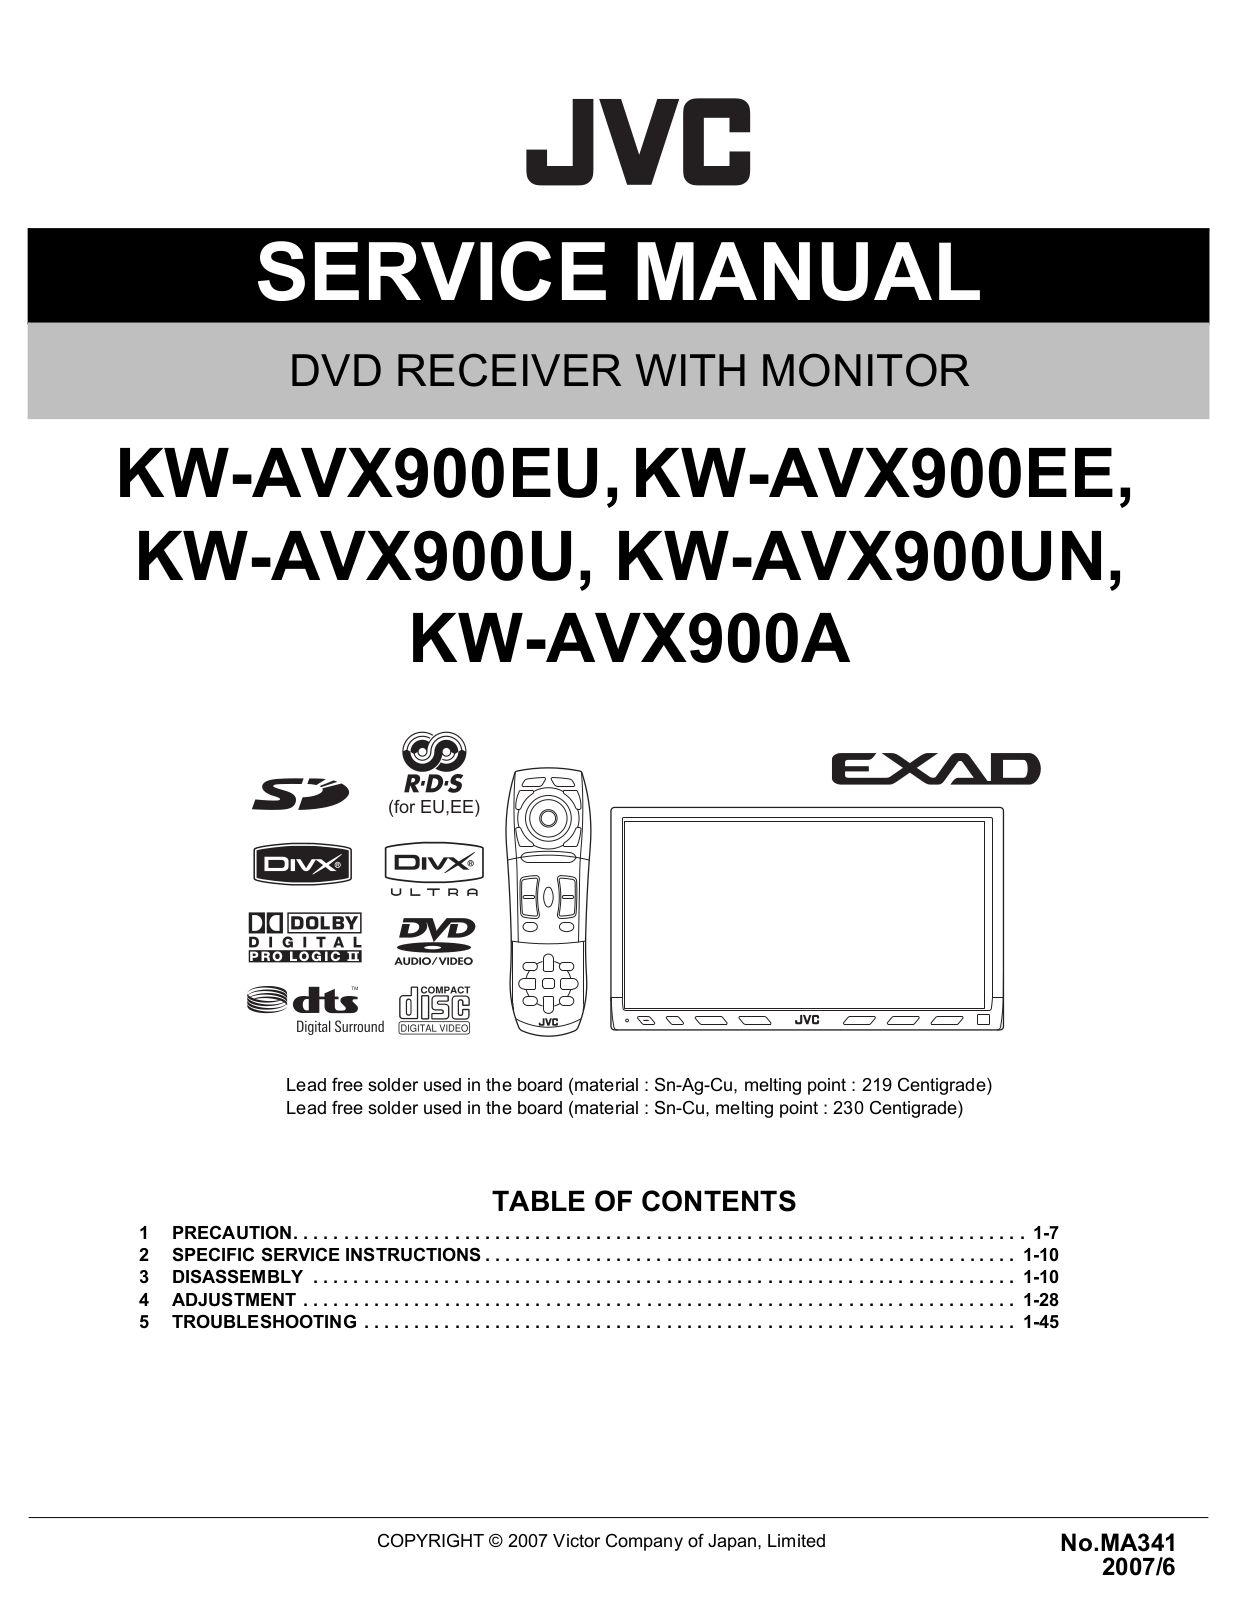 Руководство по эксплуатации для устройства JVC KW-AVX900